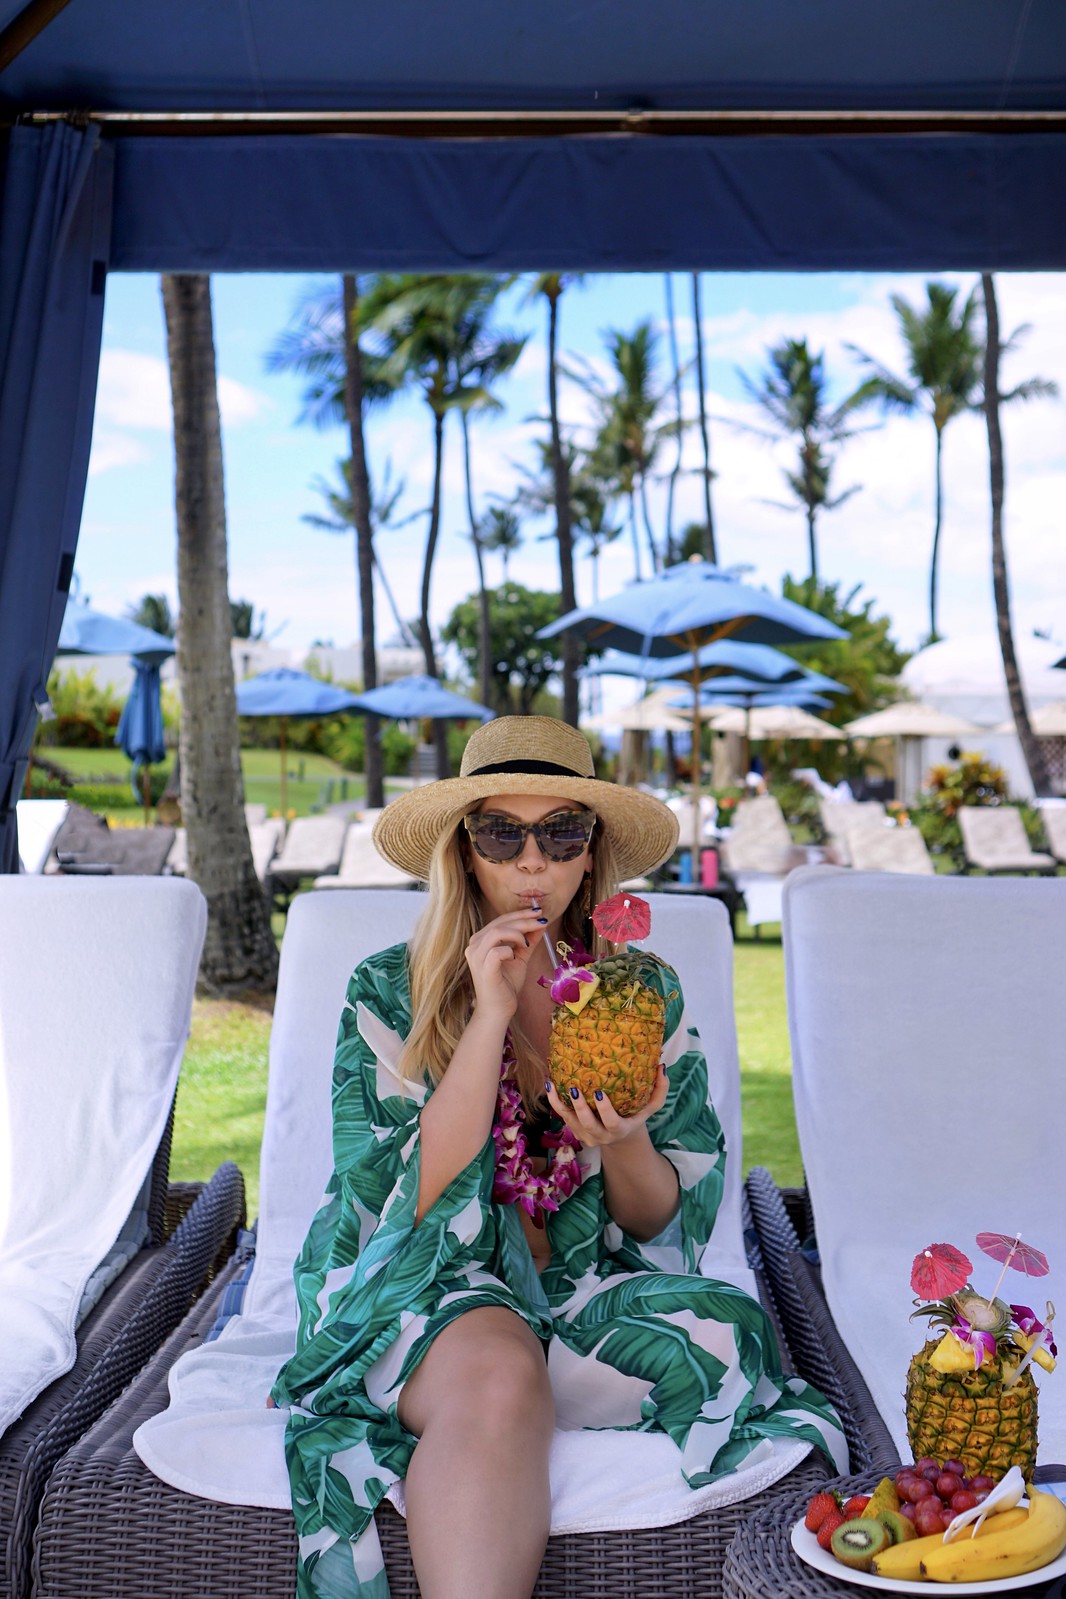 Cabana Drinking Pineapple Drink Fairmont Kea Lani BEST Hotel in Maui Where to Stay on Maui Hawaii